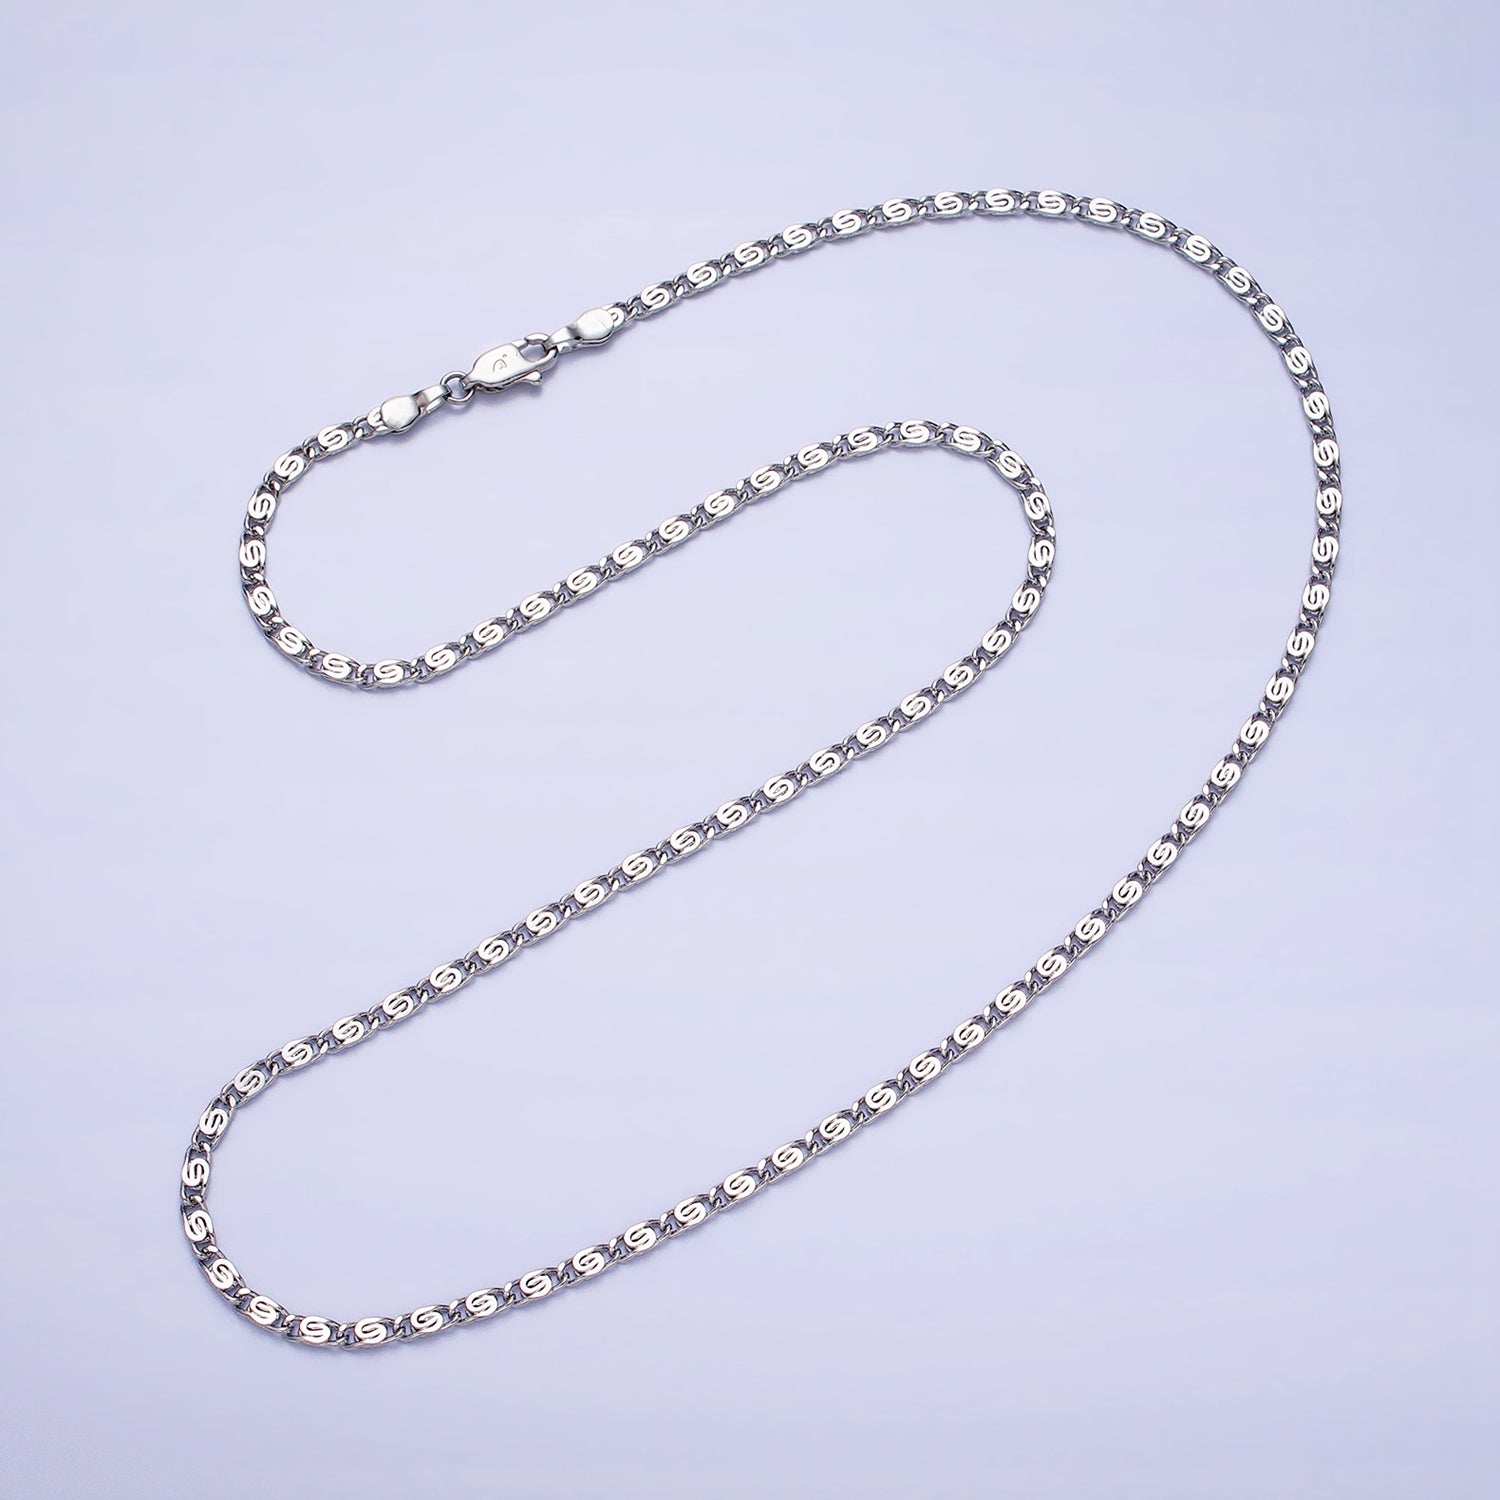 Dainty Scroll Chain - 2.5mm wide Silver Necklace Chain 19.75 inch  WA173 - DLUXCA